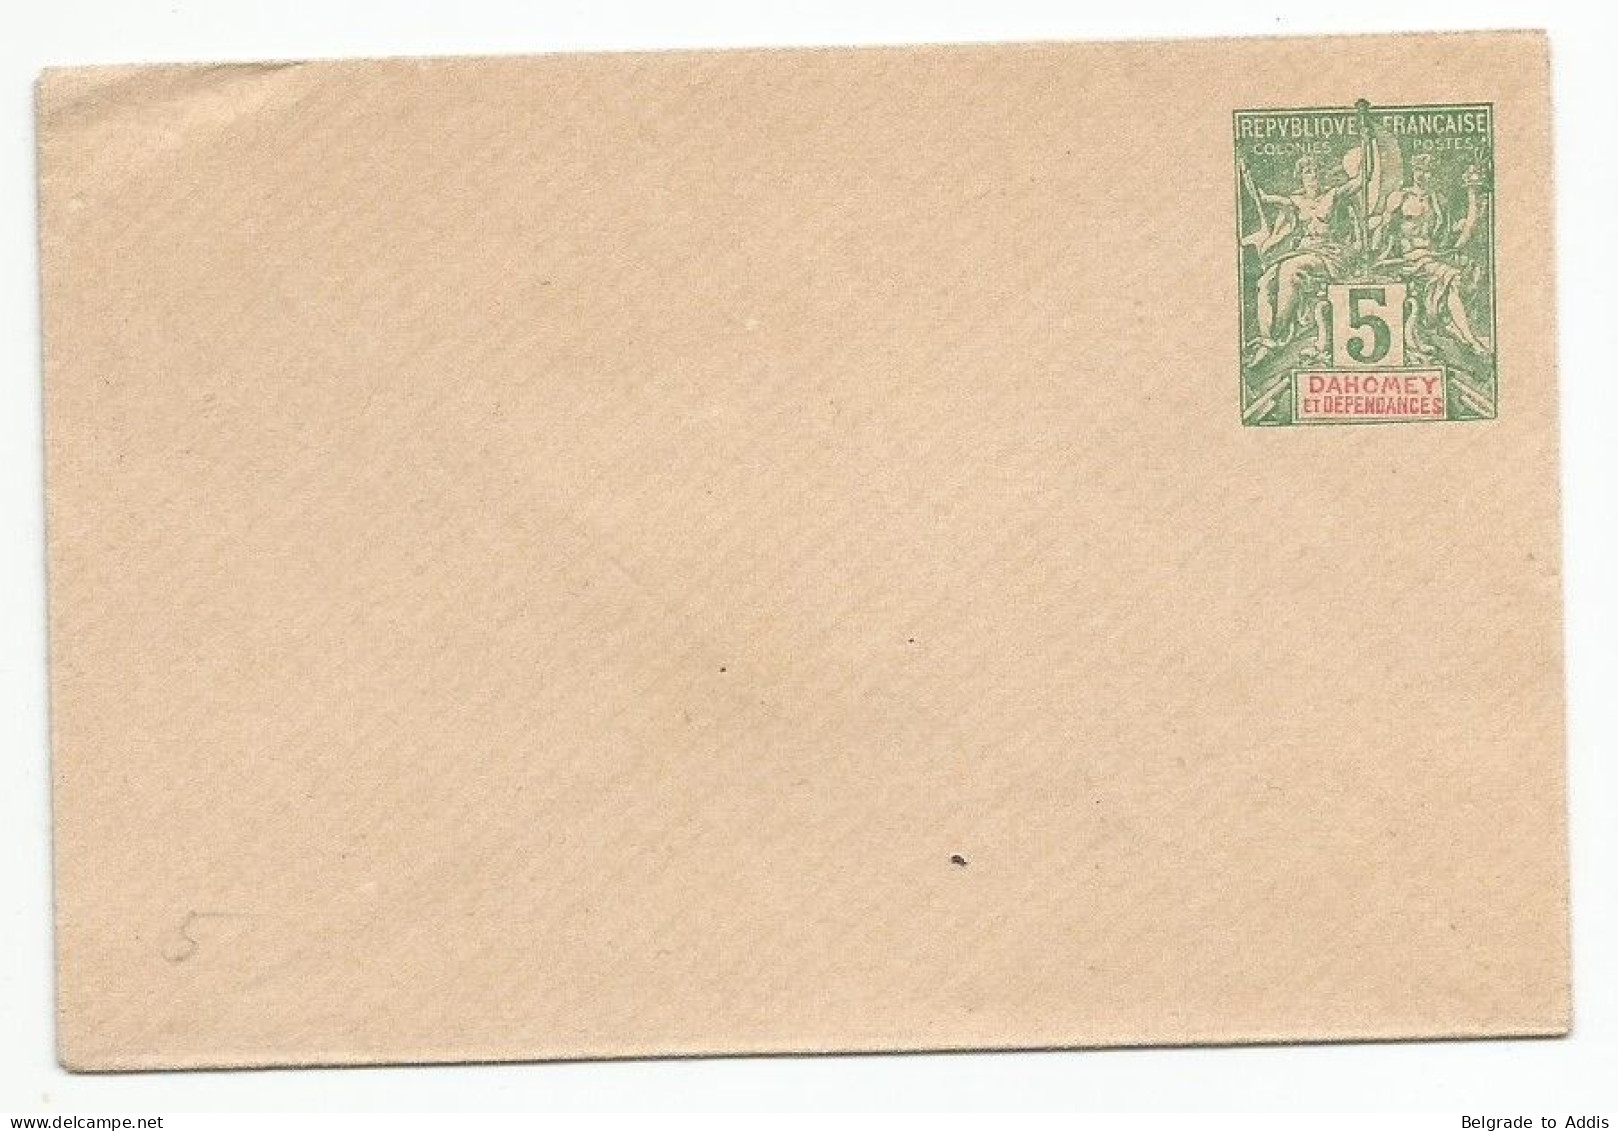 Dahomey Benin Enveloppe Entier Postal Stationery 1900 Type Groupe 5c. - Covers & Documents